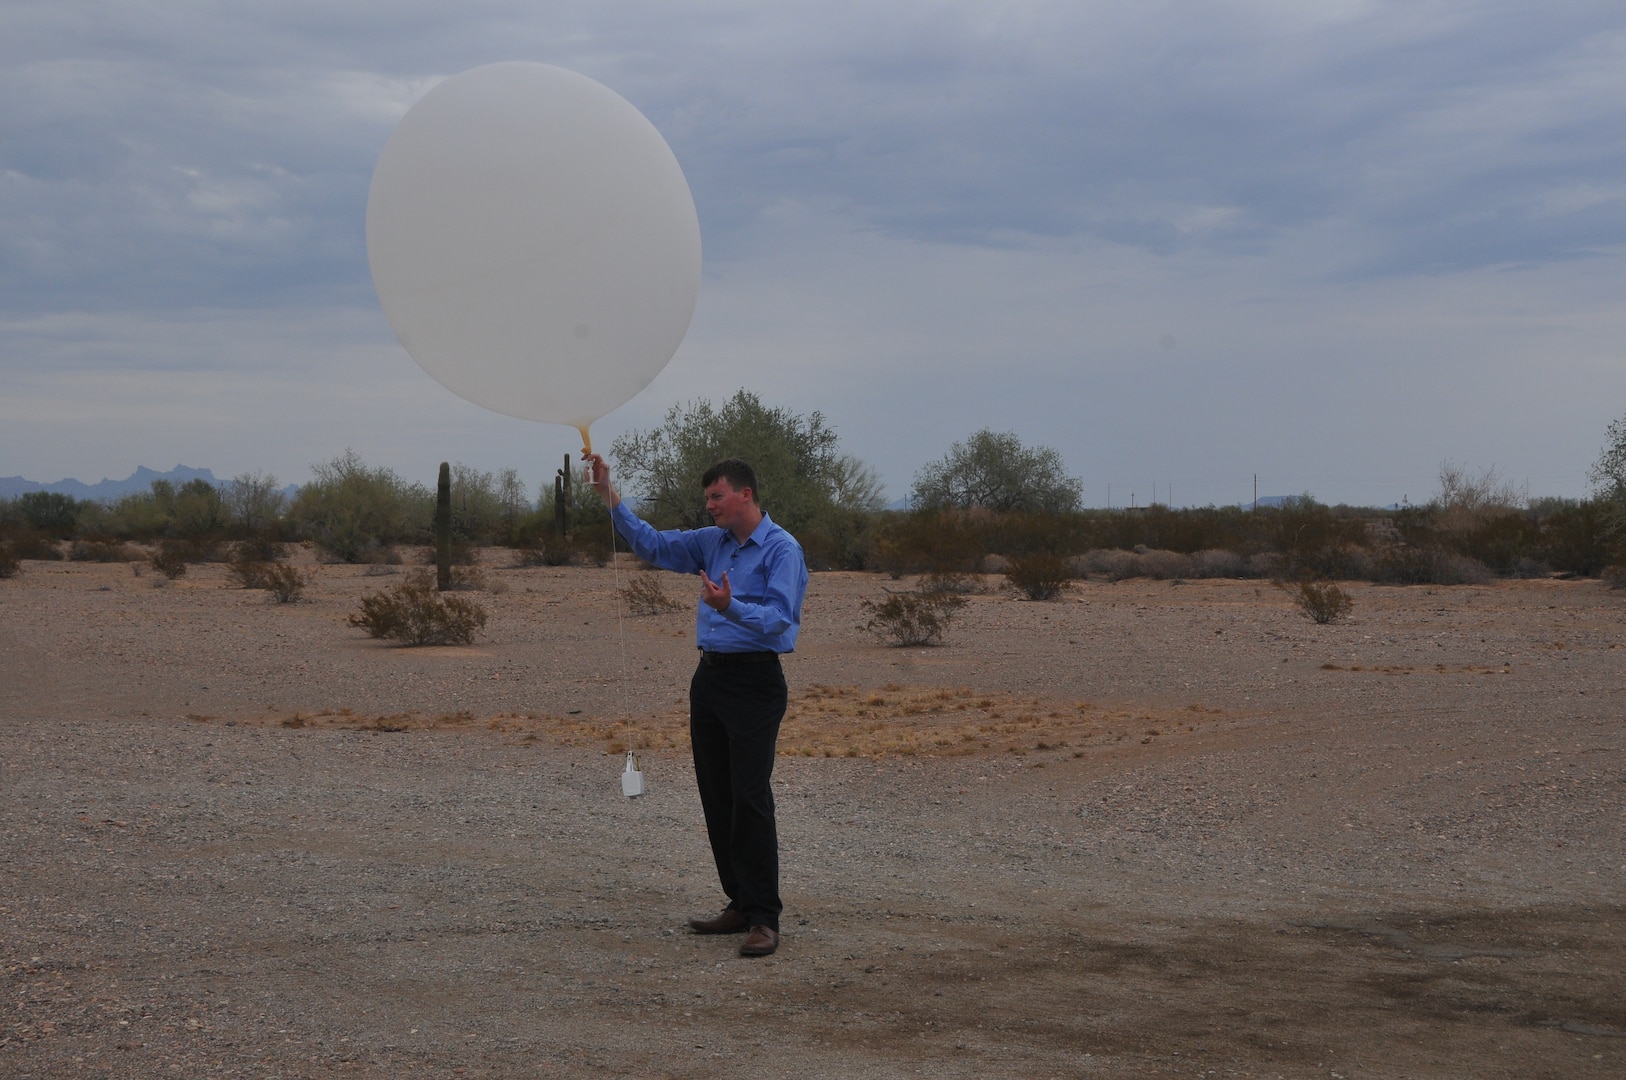 A man launches a balloon.